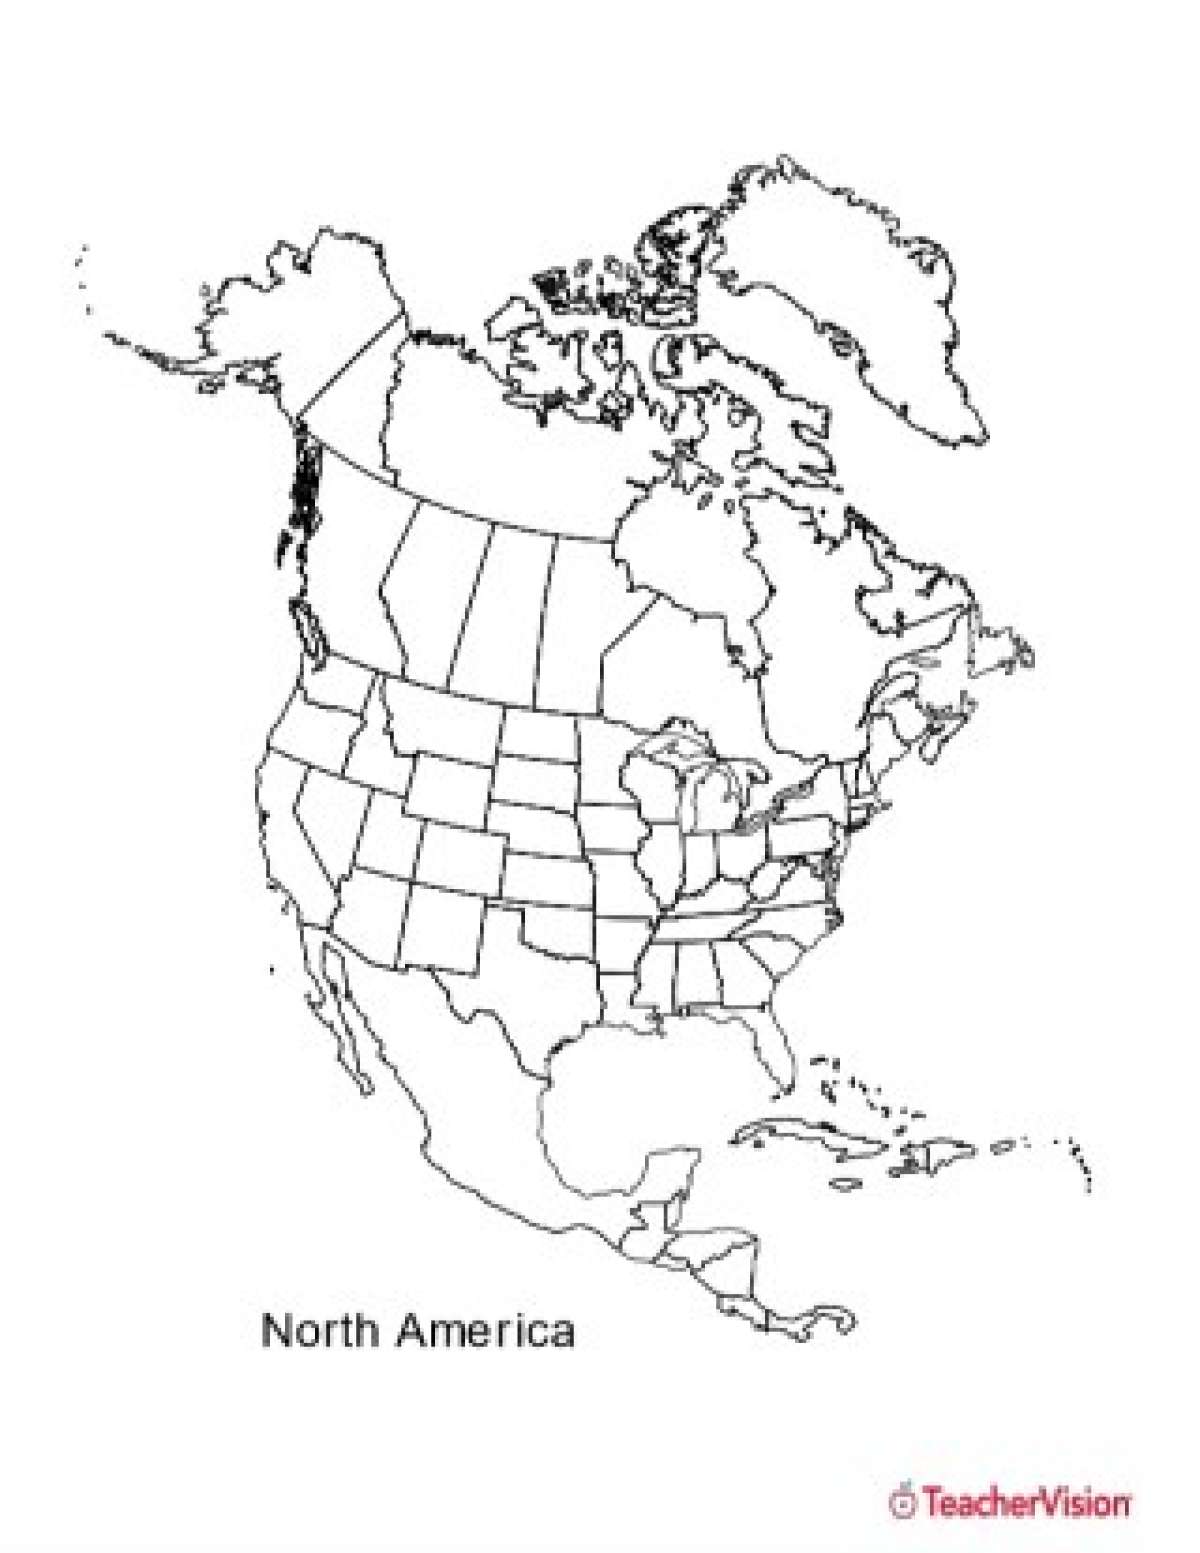 Black North America Logo - Outline Map of North America